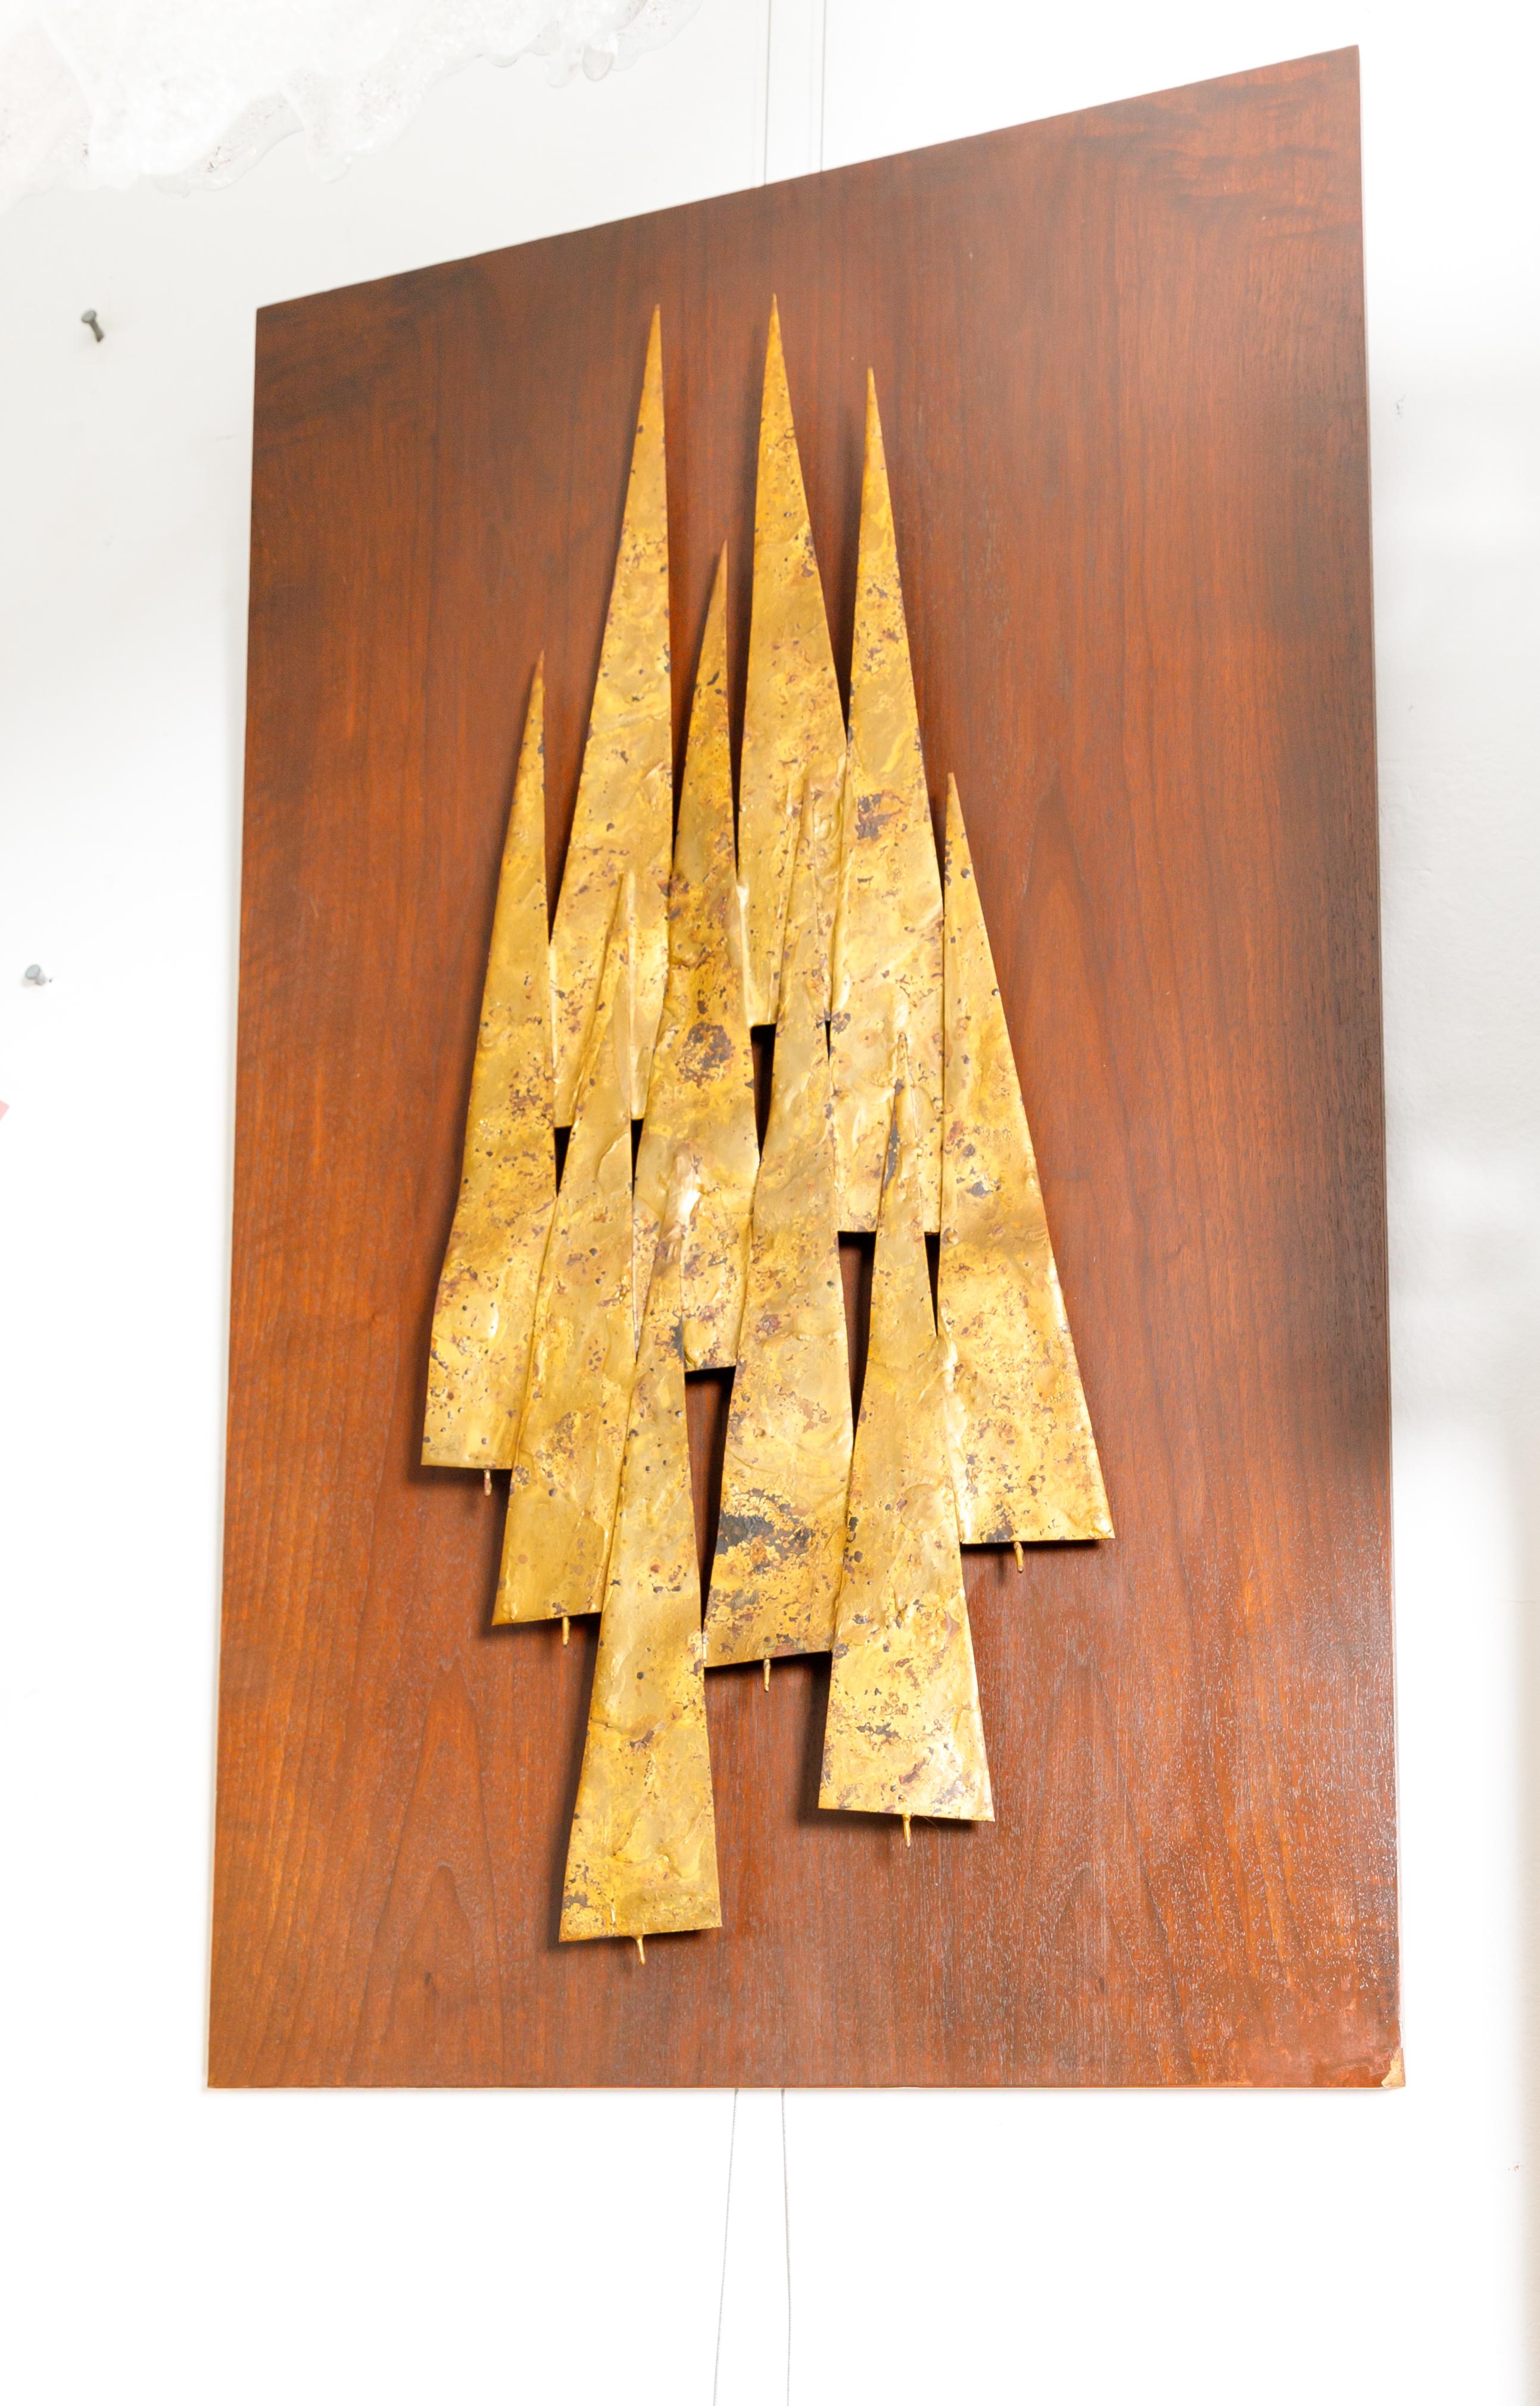 Metal tree form sculpture mounted on walnut plank.